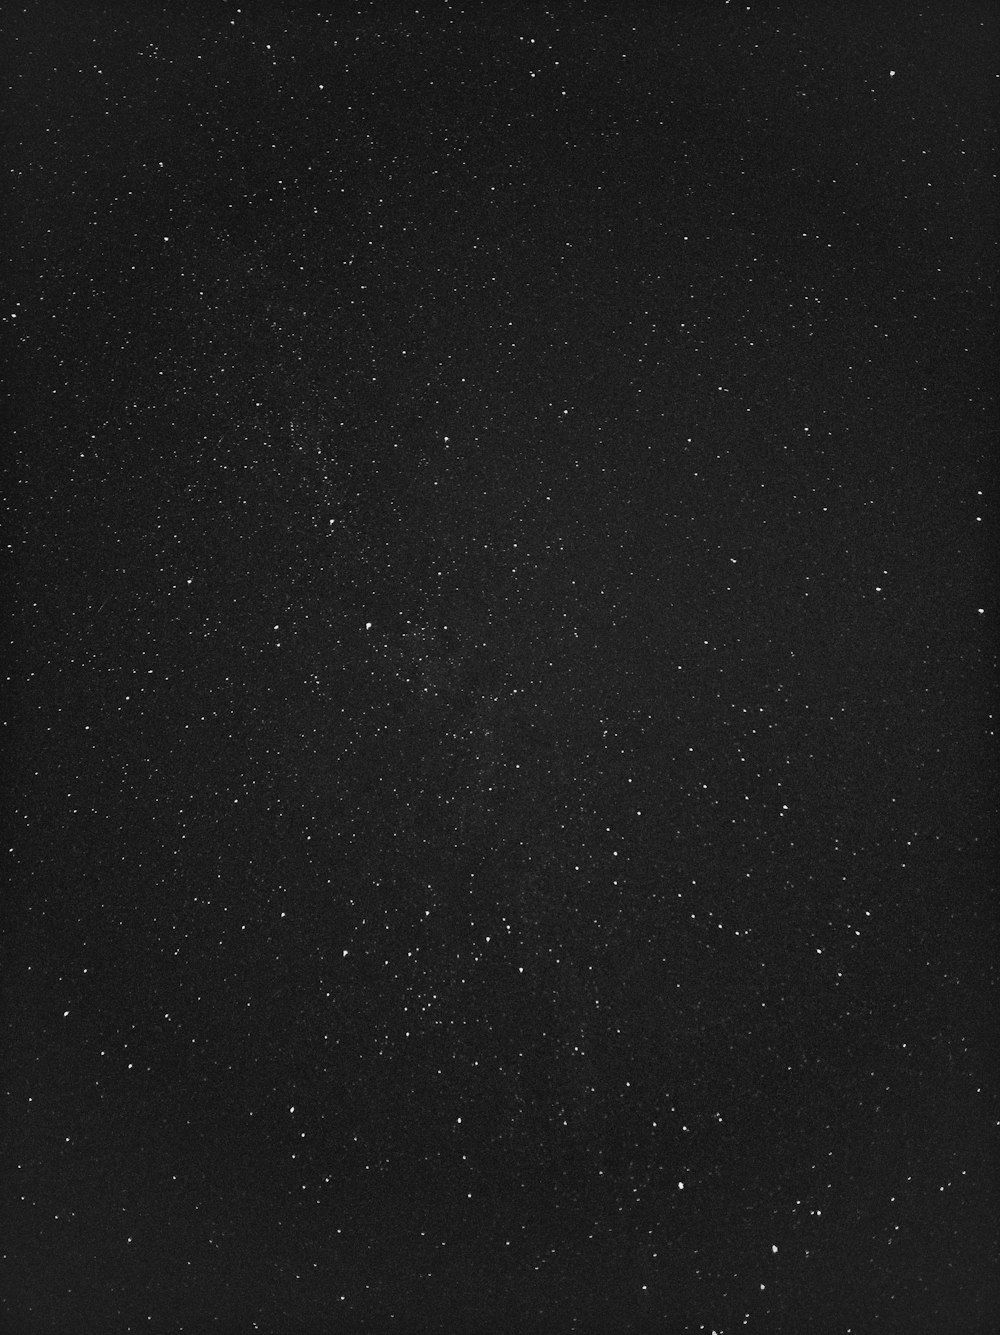 Black and white stars during night time photo – Free Black Image on Unsplash